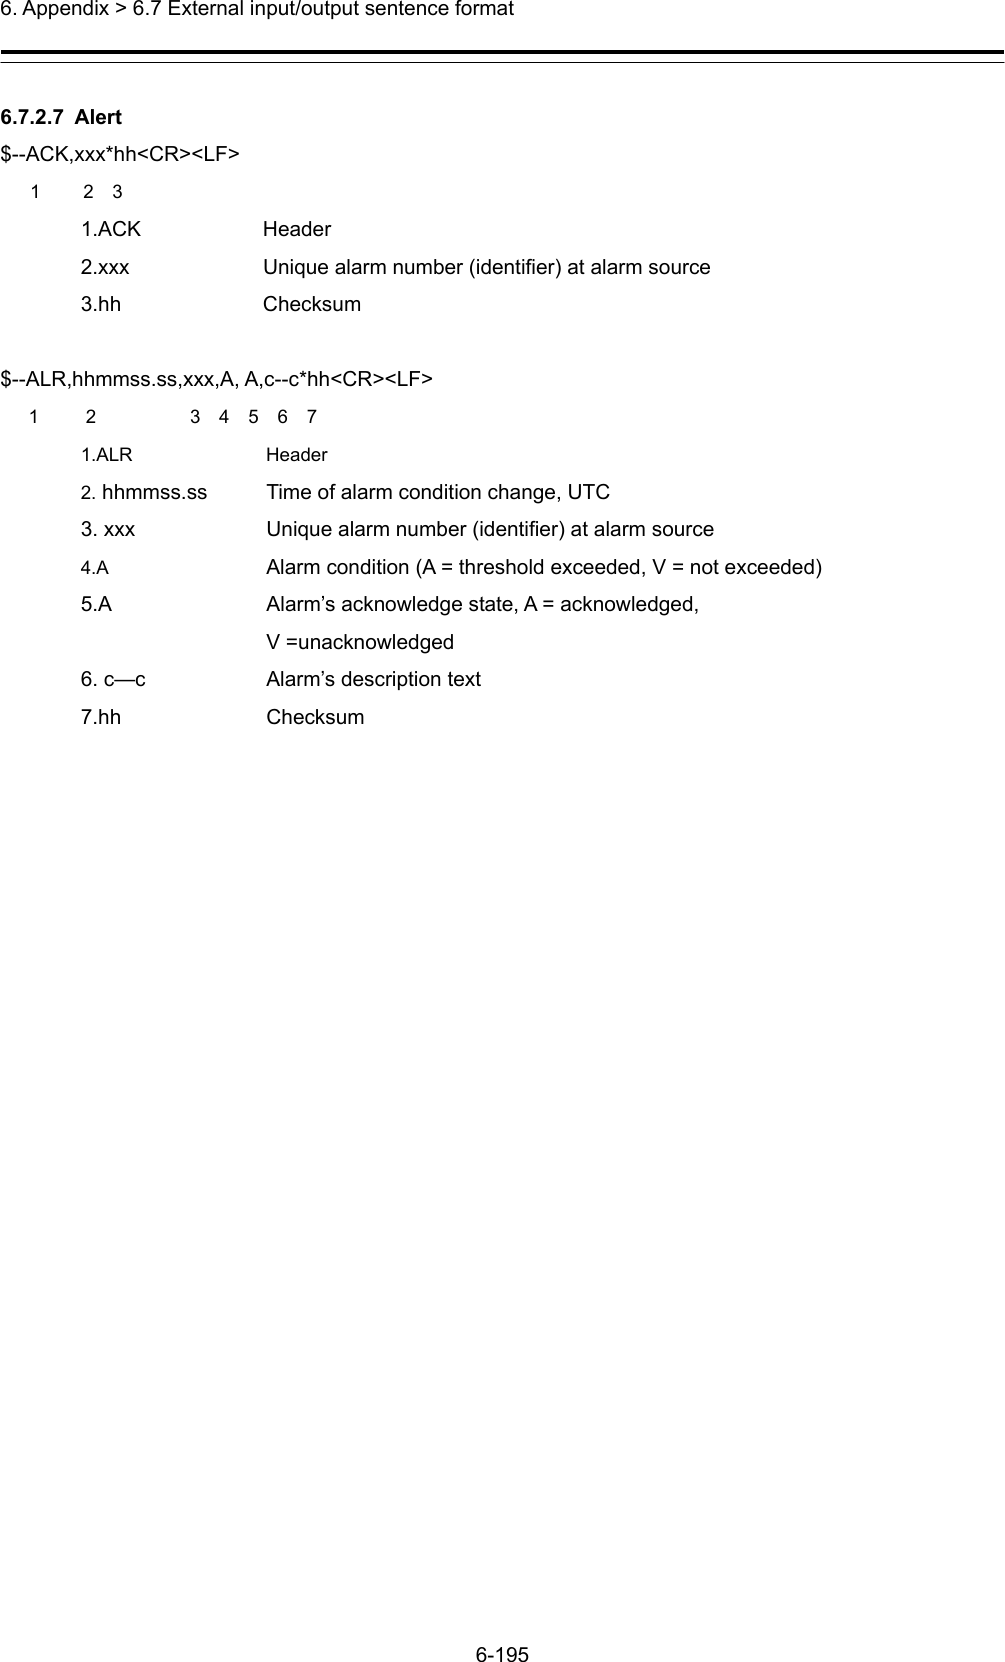  6. Appendix &gt; 6.7 External input/output sentence format 6-195  6.7.2.7 Alert $--ACK,xxx*hh&lt;CR&gt;&lt;LF&gt; 1  2  3 1.ACK   Header 2.xxx    Unique alarm number (identifier) at alarm source 3.hh   Checksum  $--ALR,hhmmss.ss,xxx,A, A,c--c*hh&lt;CR&gt;&lt;LF&gt;    1     2          3  4  5  6  7 1.ALR Header 2. hhmmss.ss  Time of alarm condition change, UTC 3. xxx  Unique alarm number (identifier) at alarm source 4.A  Alarm condition (A = threshold exceeded, V = not exceeded) 5.A  Alarm’s acknowledge state, A = acknowledged,  V =unacknowledged 6. c—c  Alarm’s description text 7.hh Checksum  